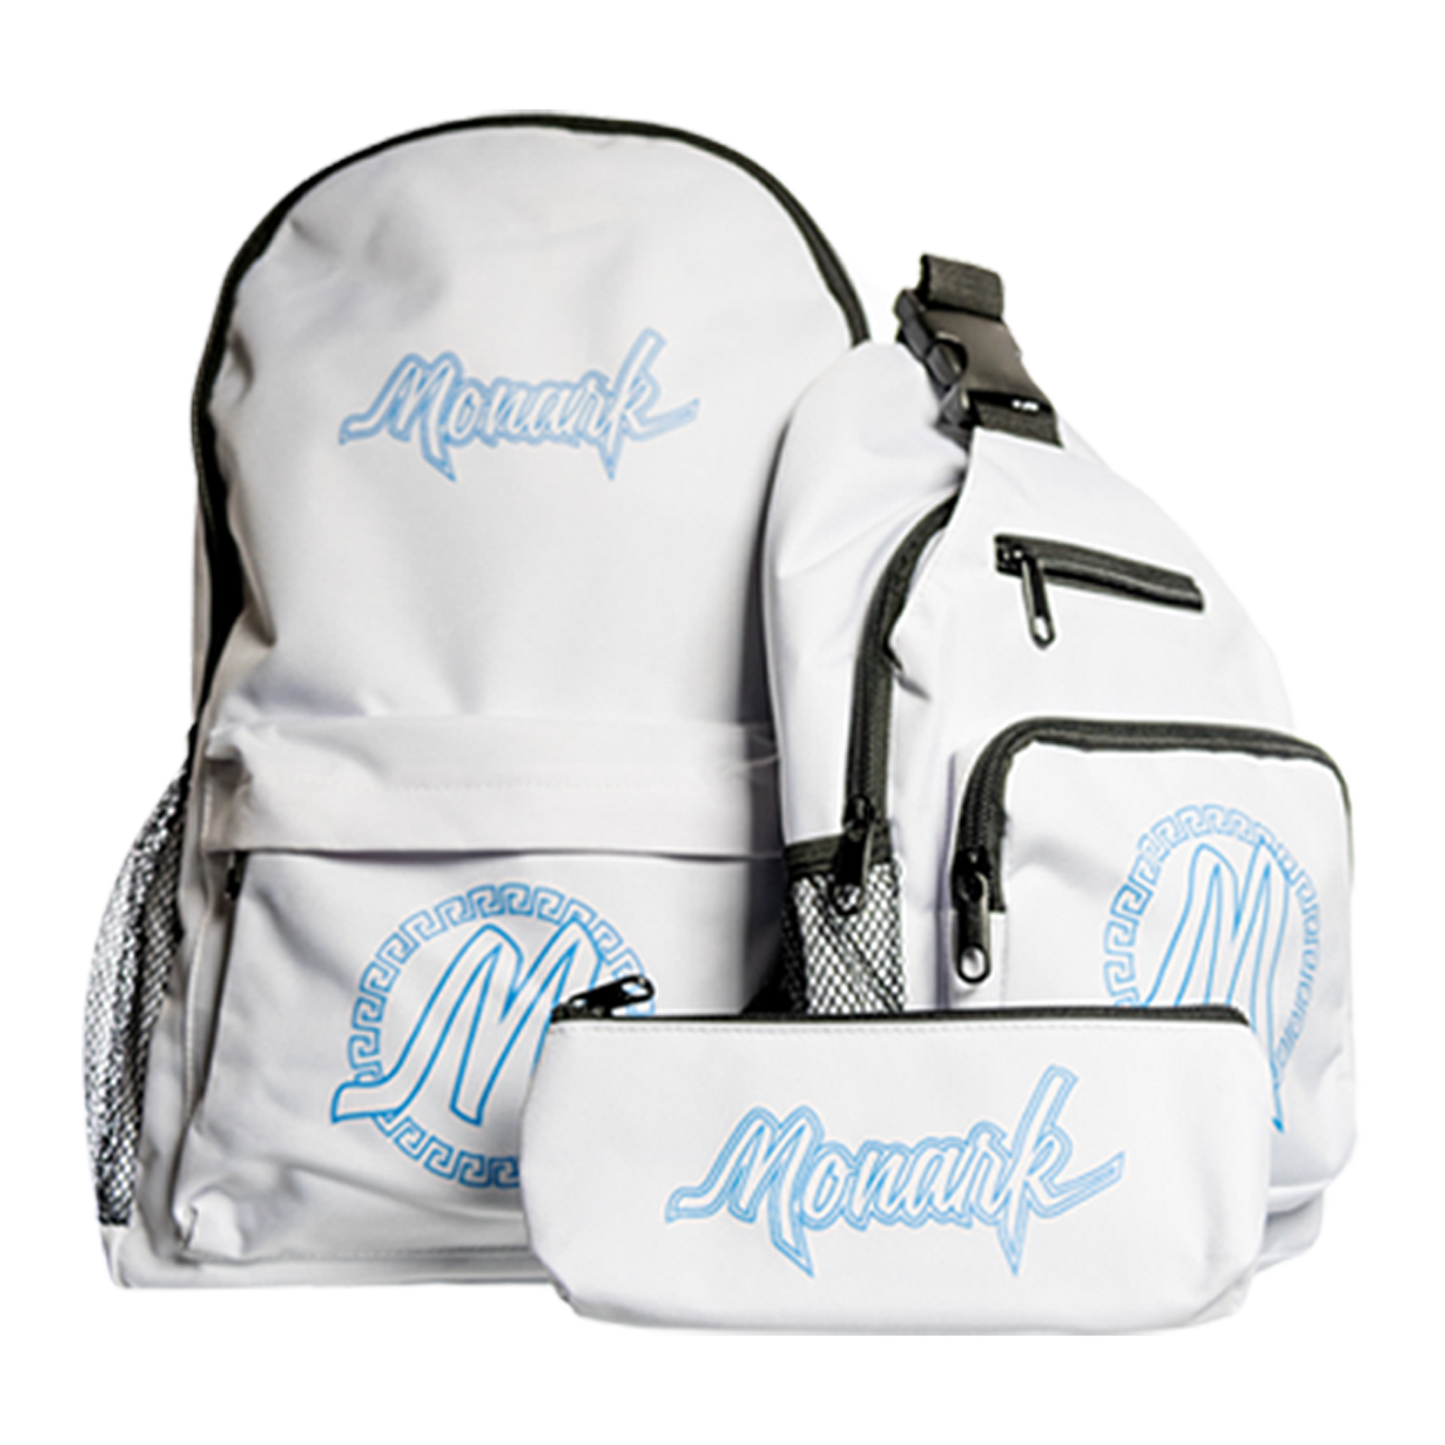 White Monark Backpack w/ White Shoulder Bag & White Pouch